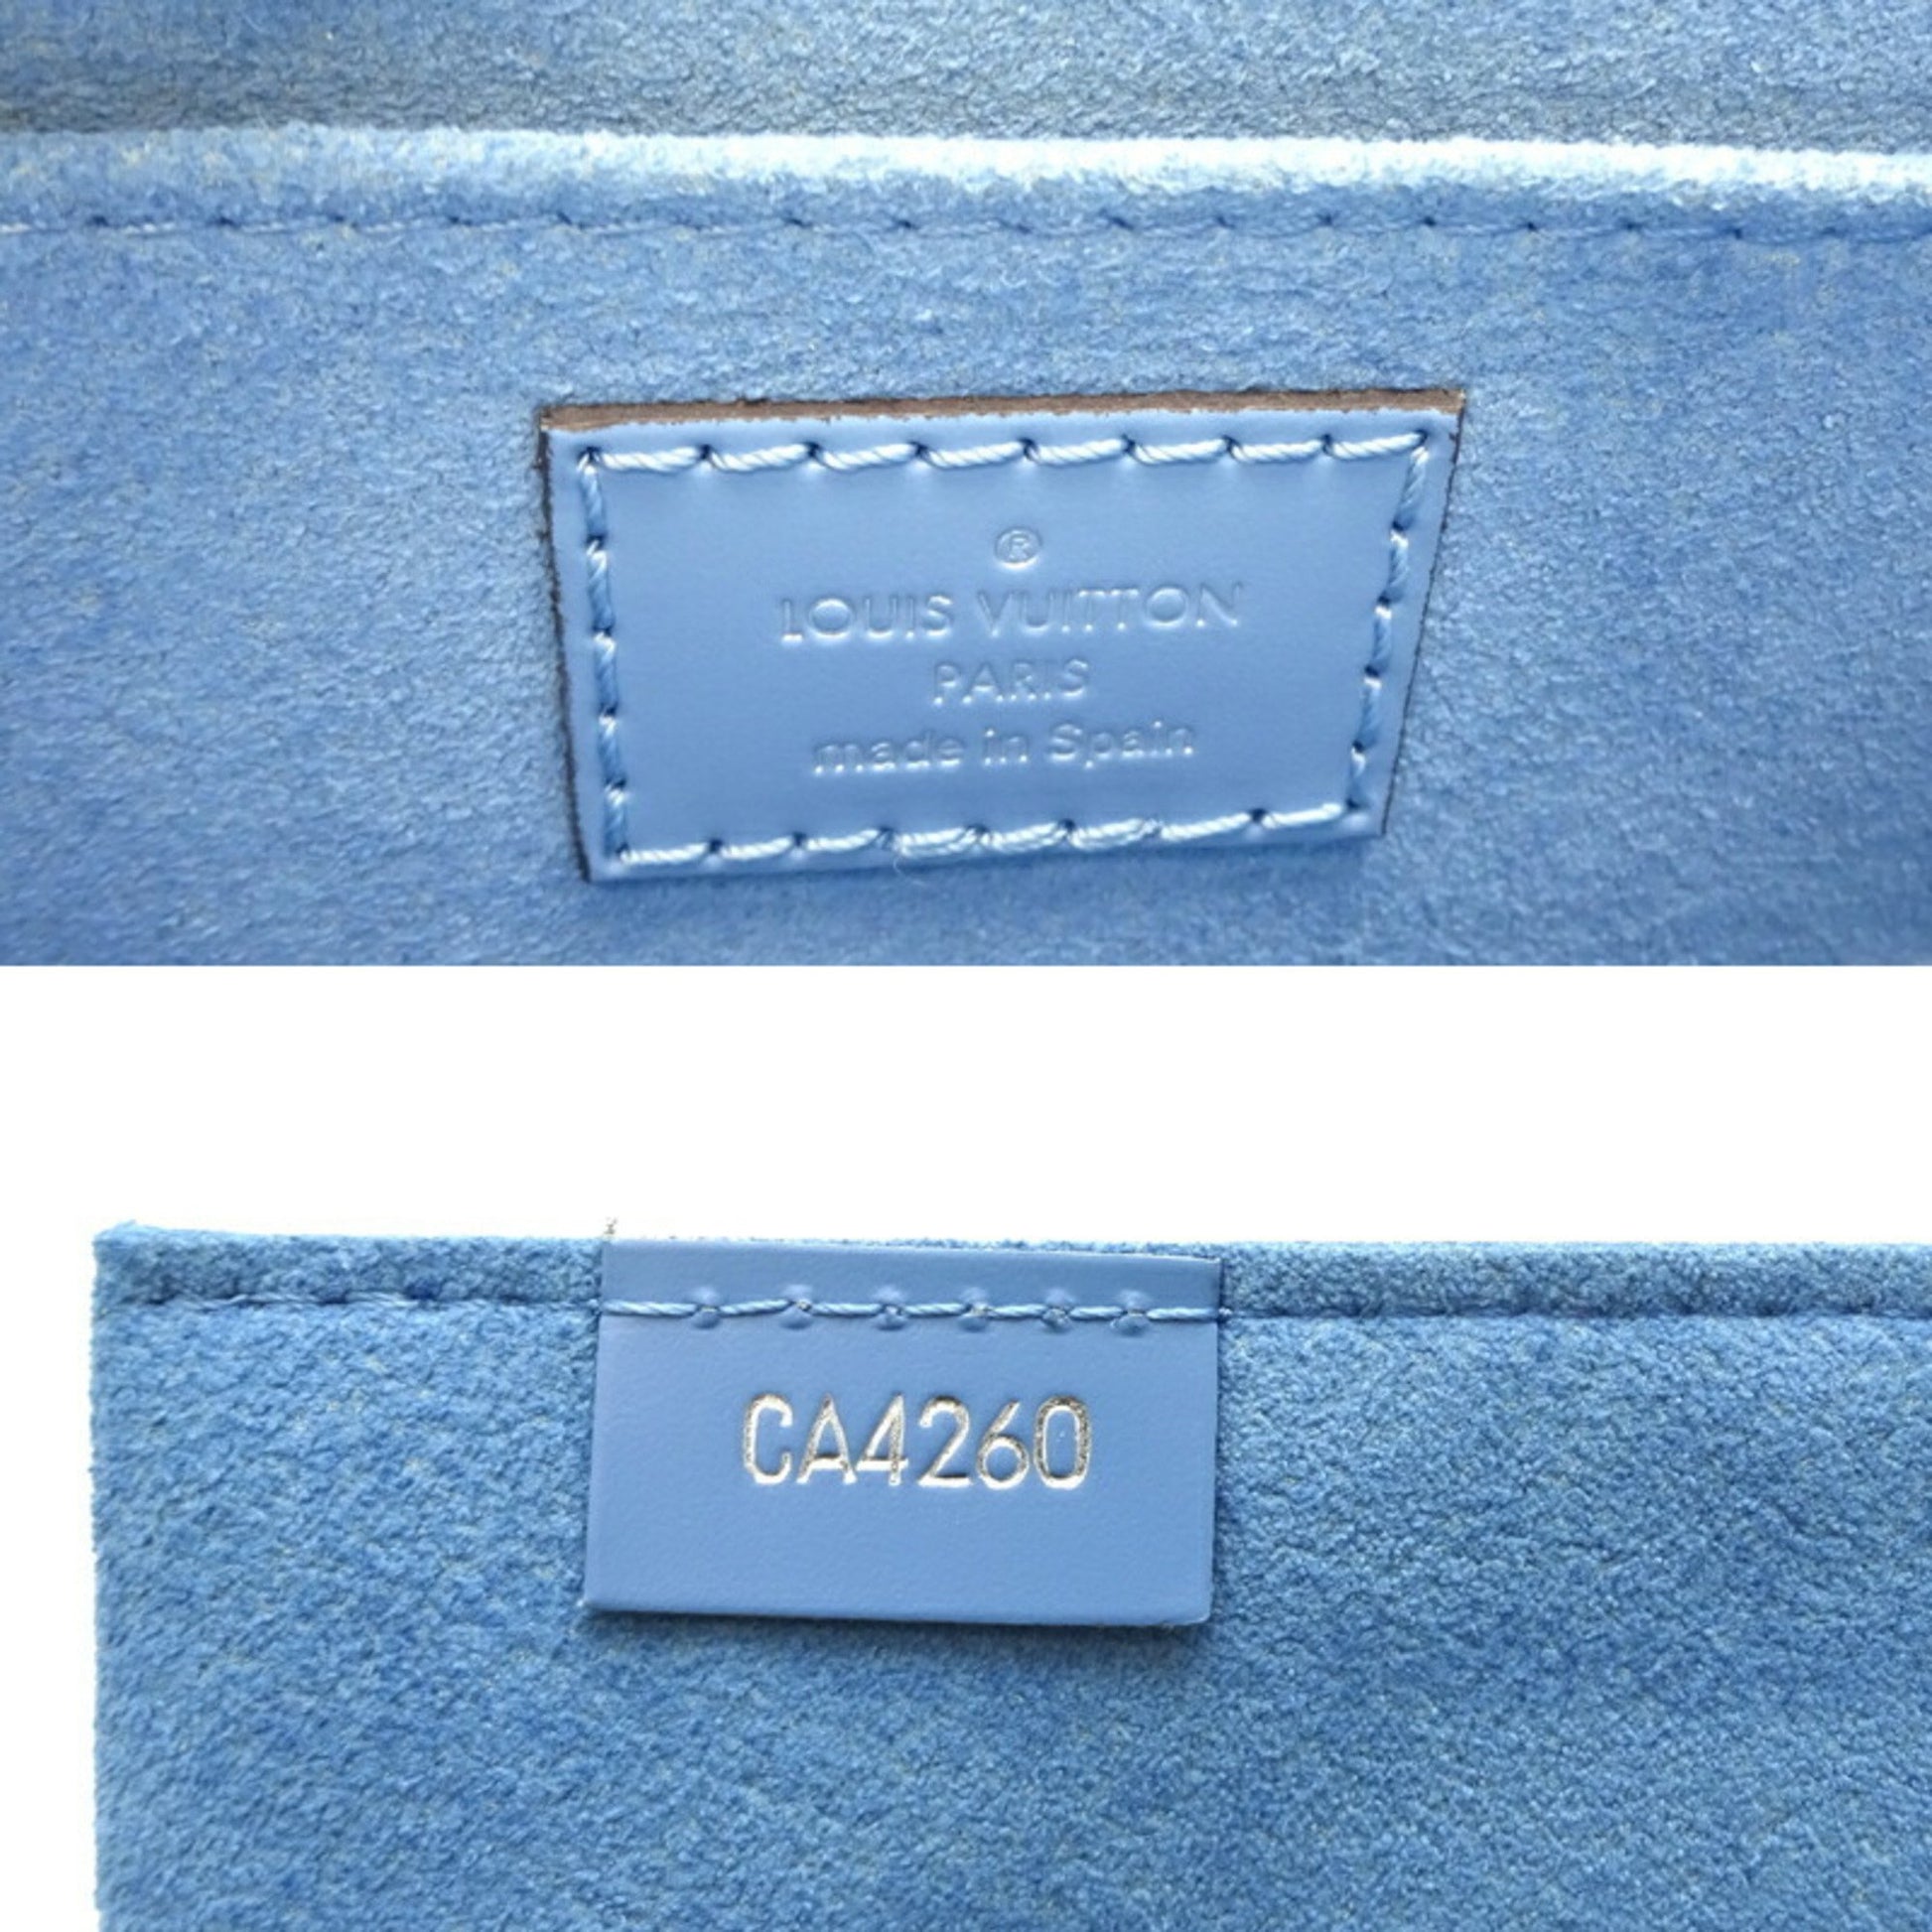 Louis Vuitton Petite Sac Pla Ladies Handbag M80167 Epi Blue